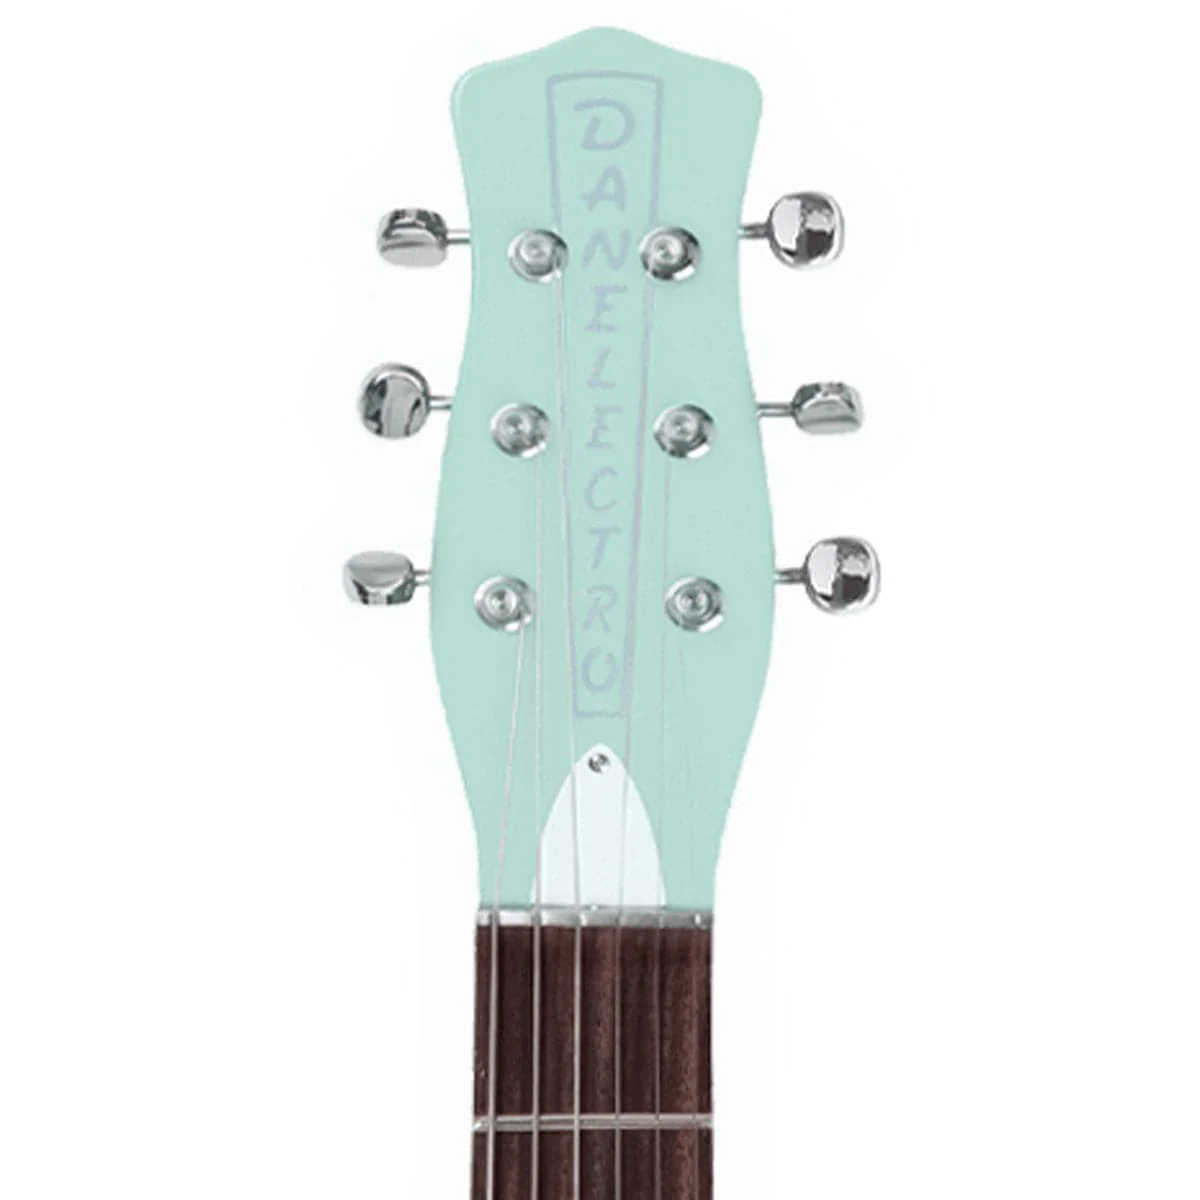 Danelectro '59M NOS+ Electric Guitar ~ Sea Foam Green | eBay